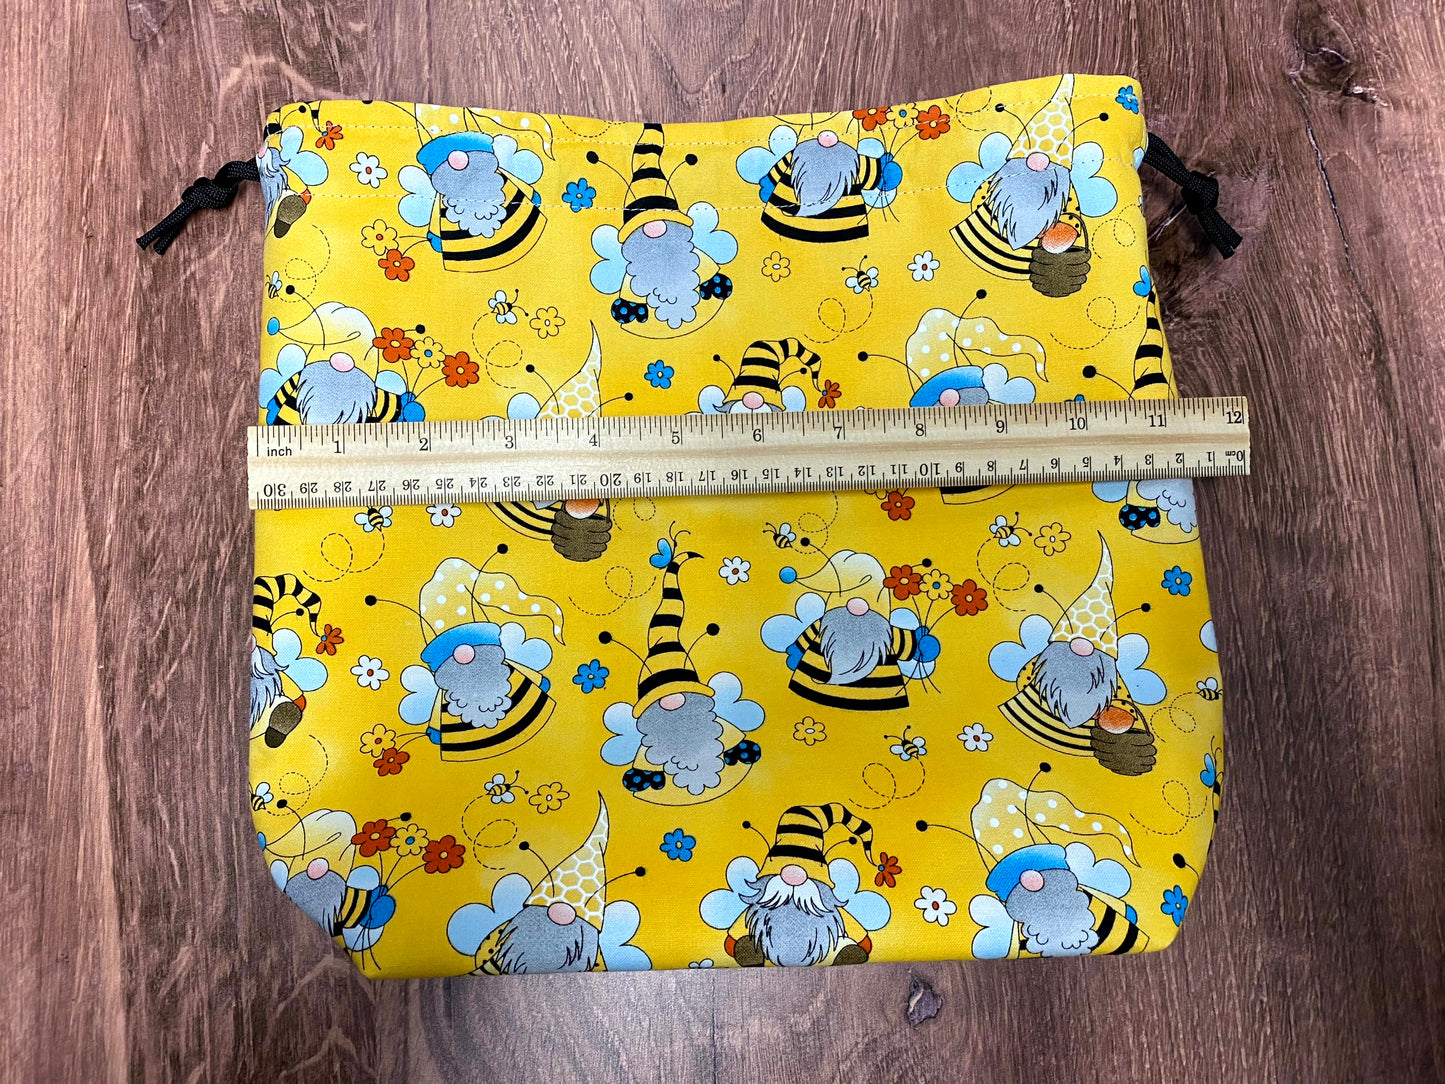 Gnome Project Bag - Drawstring Bag – Knitting Bag – Crochet Bag - Craft Bag - Bingo Bag – Cross Stitch Bag - Floral - Bee